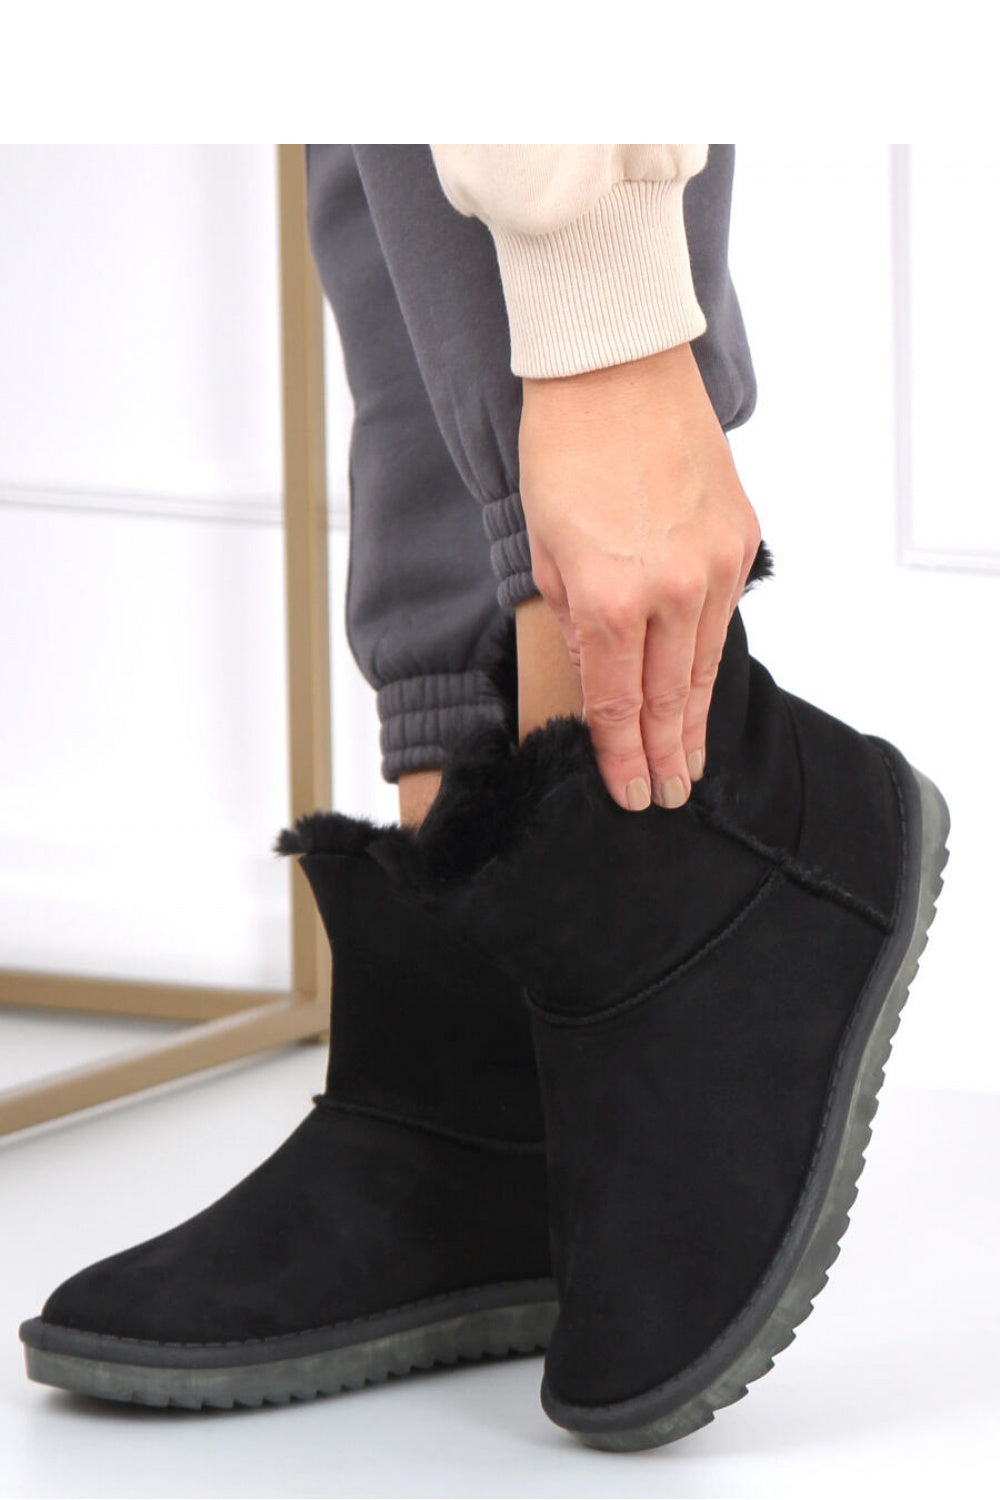 Snow boots model 159993 Inello Posh Styles Apparel